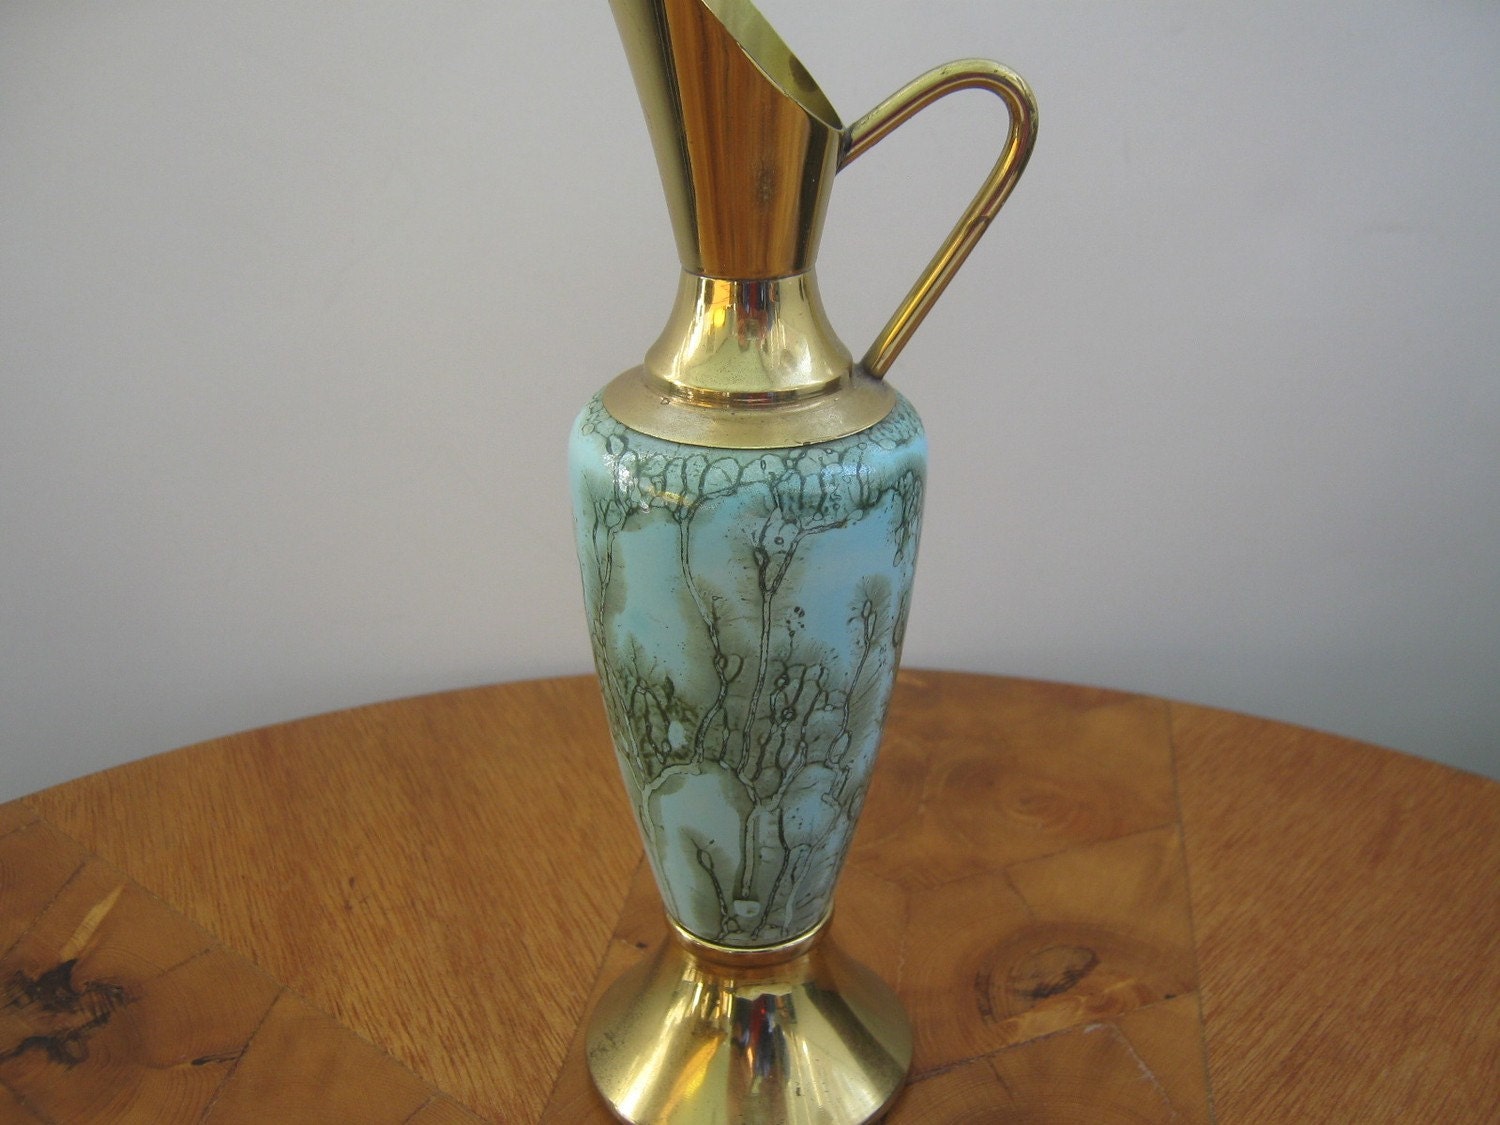 Vintage Delft Pitcher Vase from AccentOnVintage on Etsy